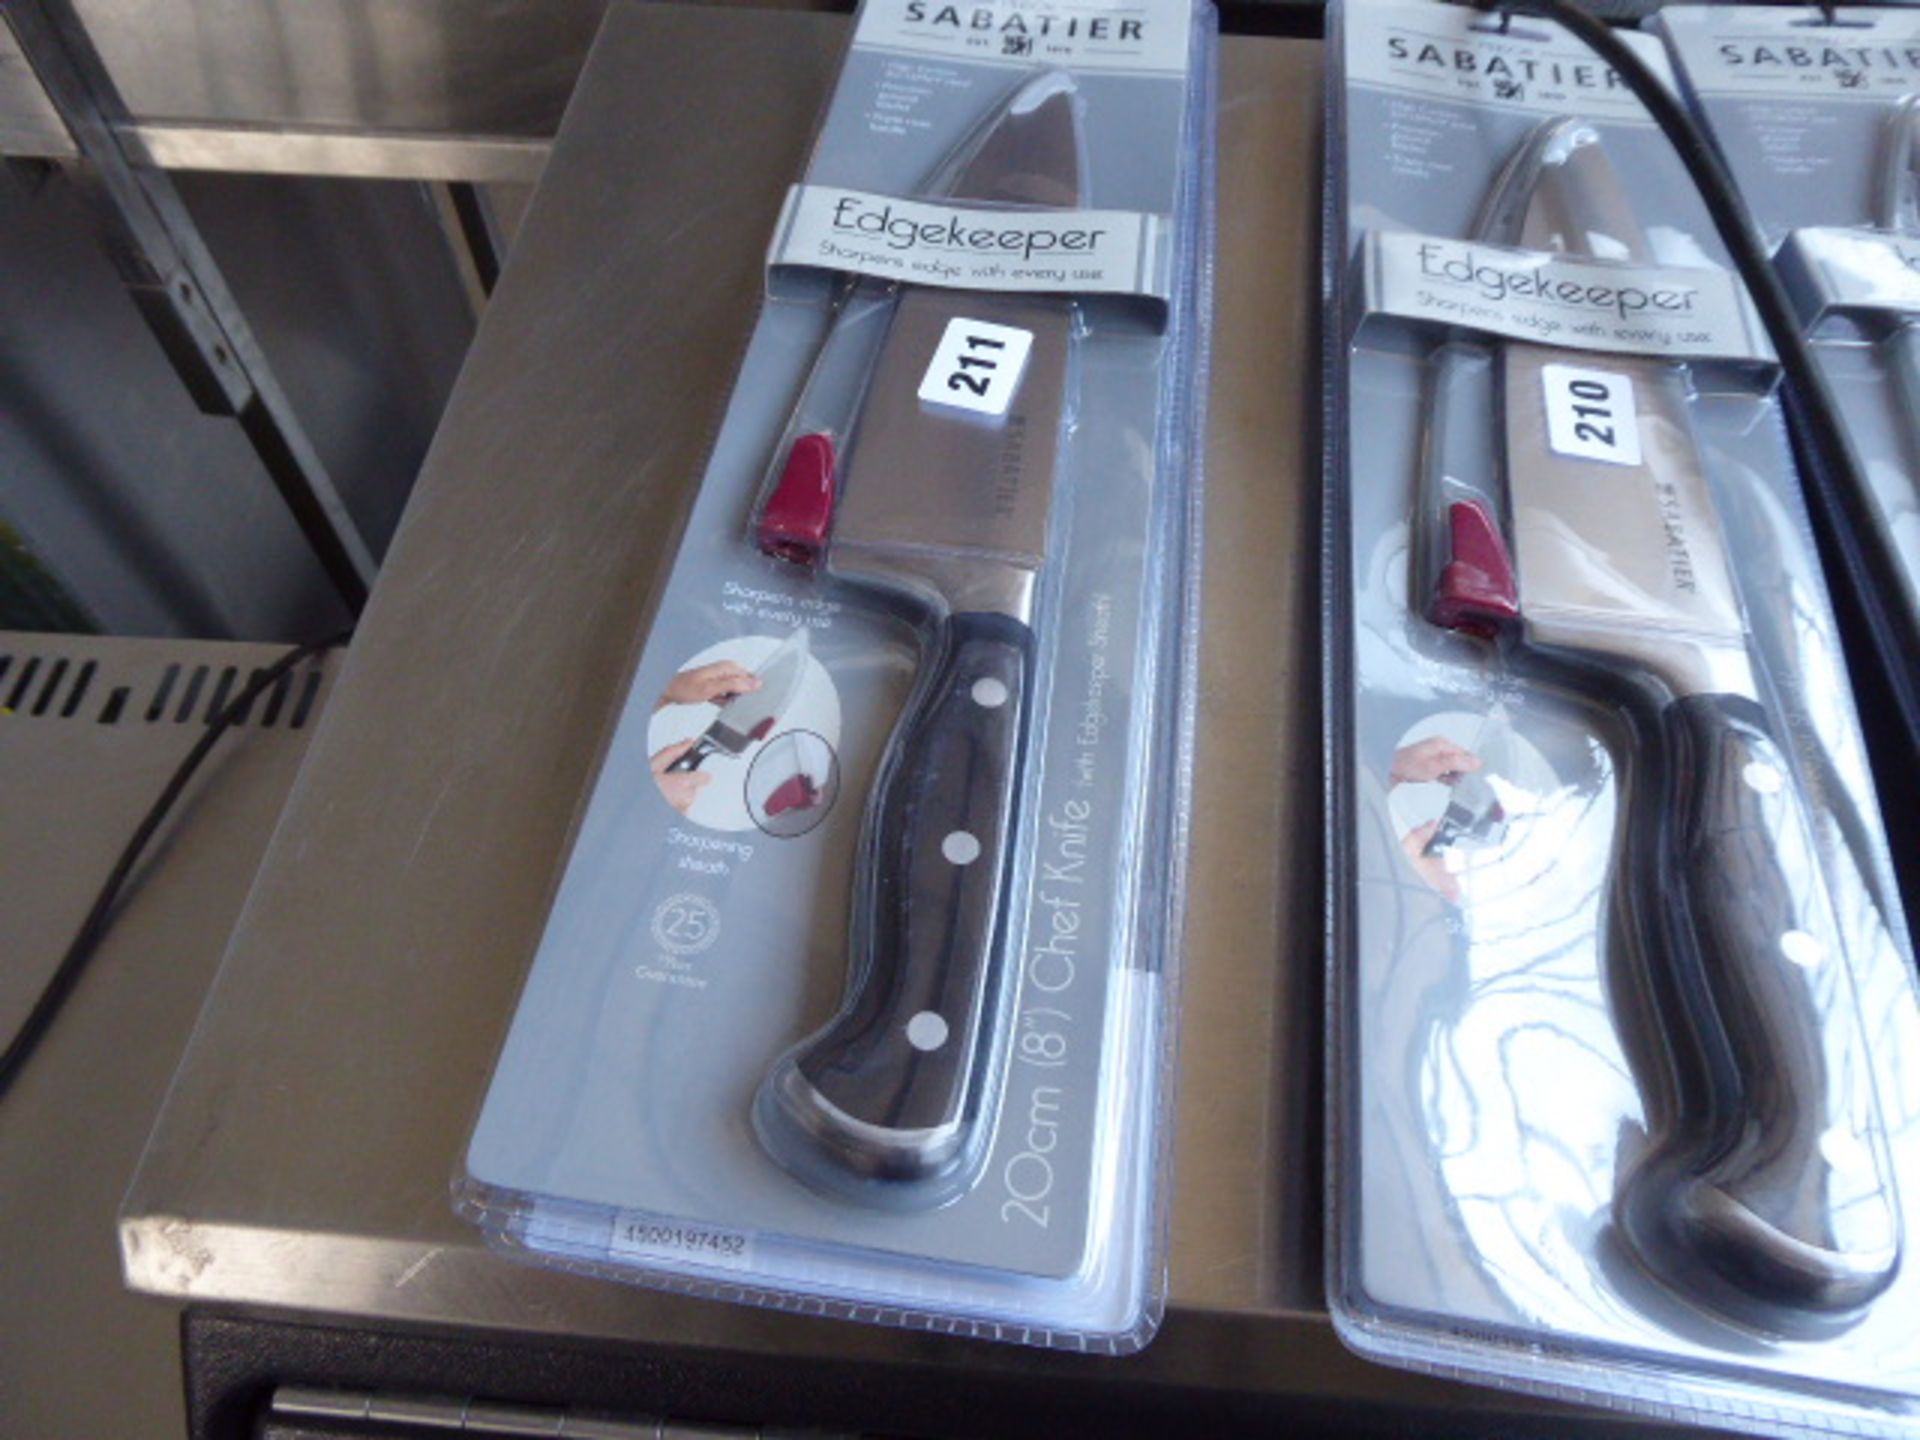 2 Sabatier Edgecleaver 8'' chefs knives